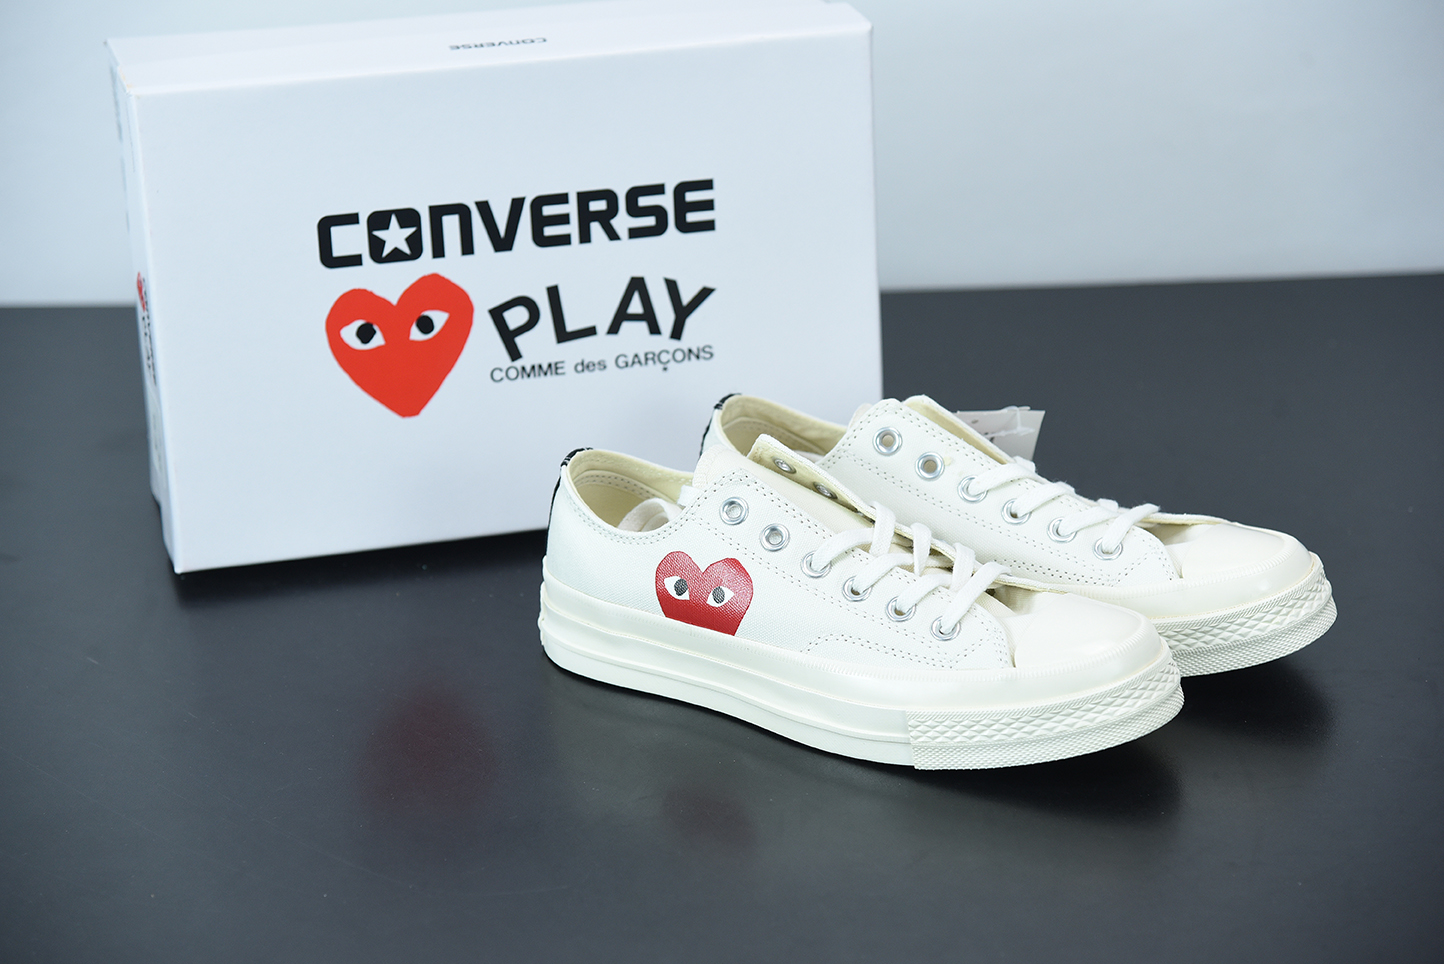 cdg play converse white